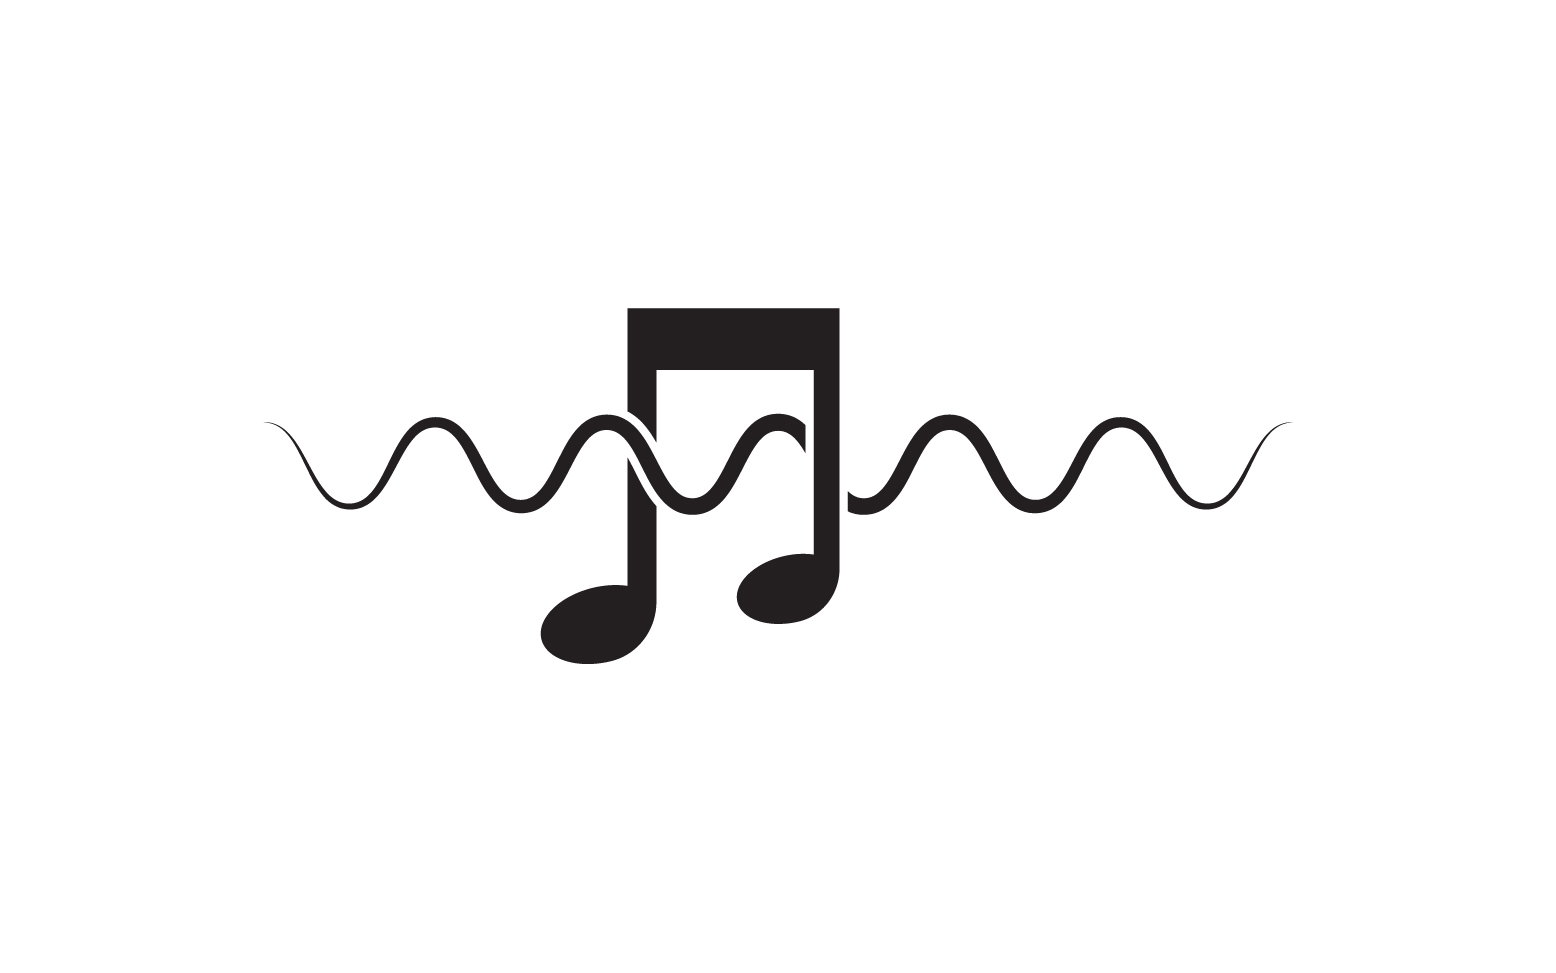 Music sound player app icon logo v1